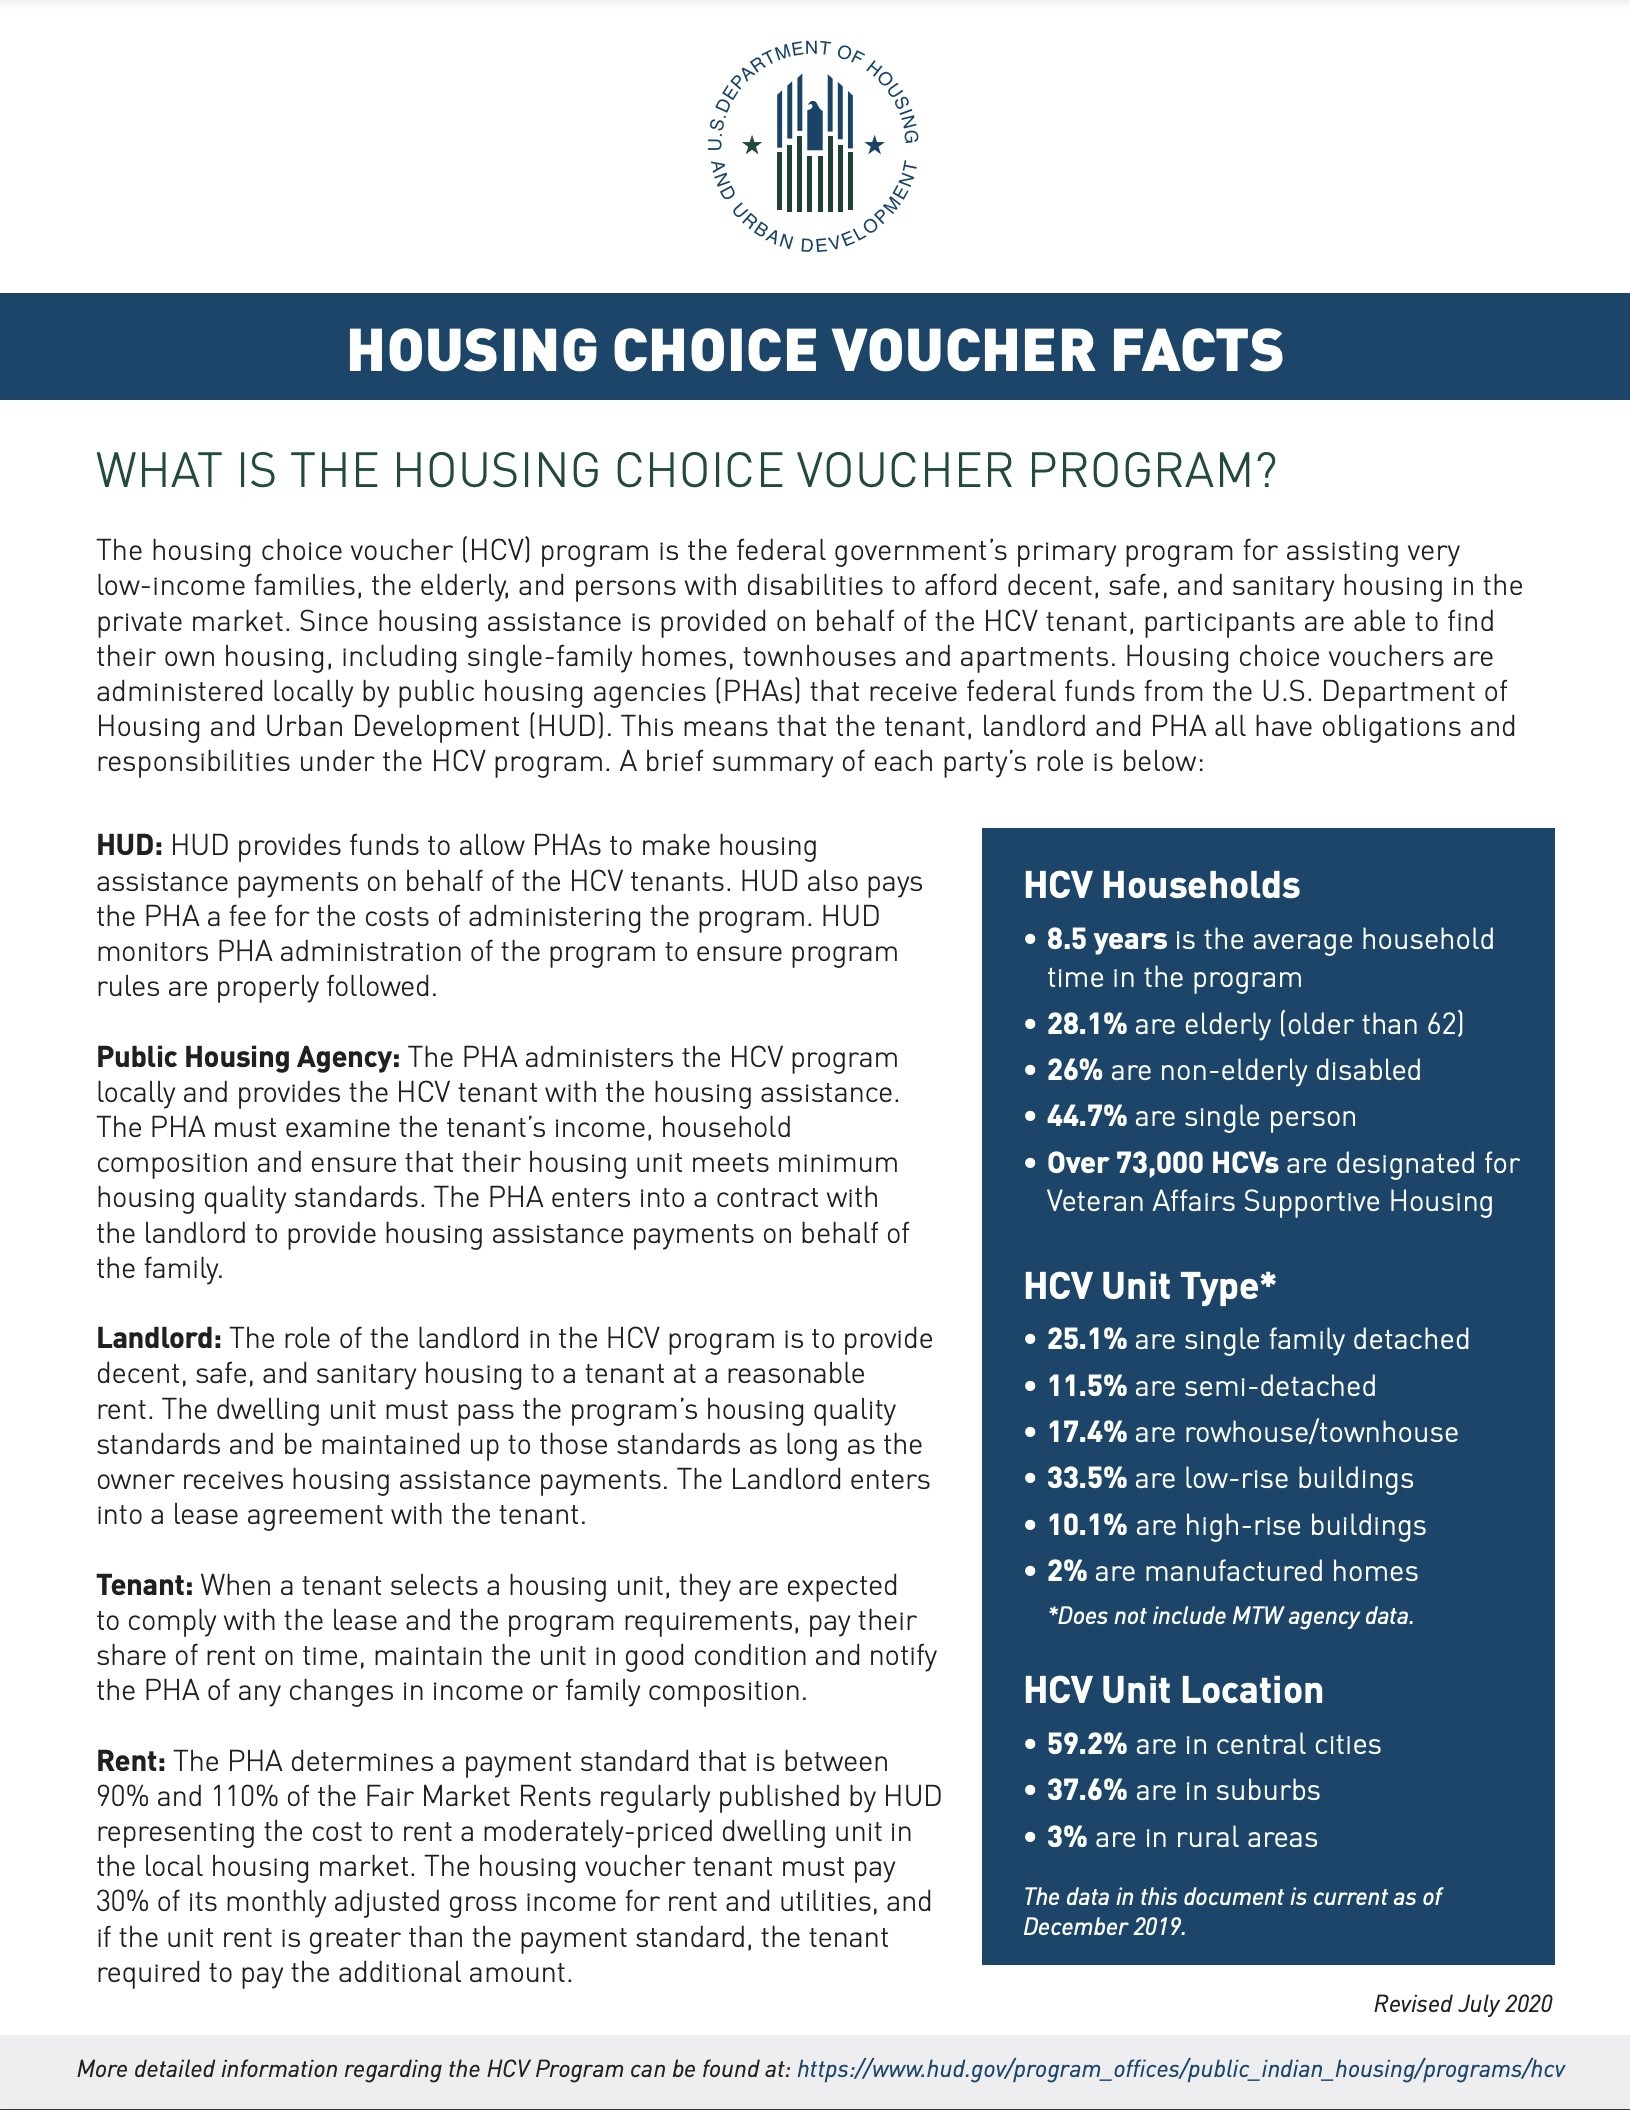 What is the Housing Choice Voucher (HCV) Program? Windsor Housing